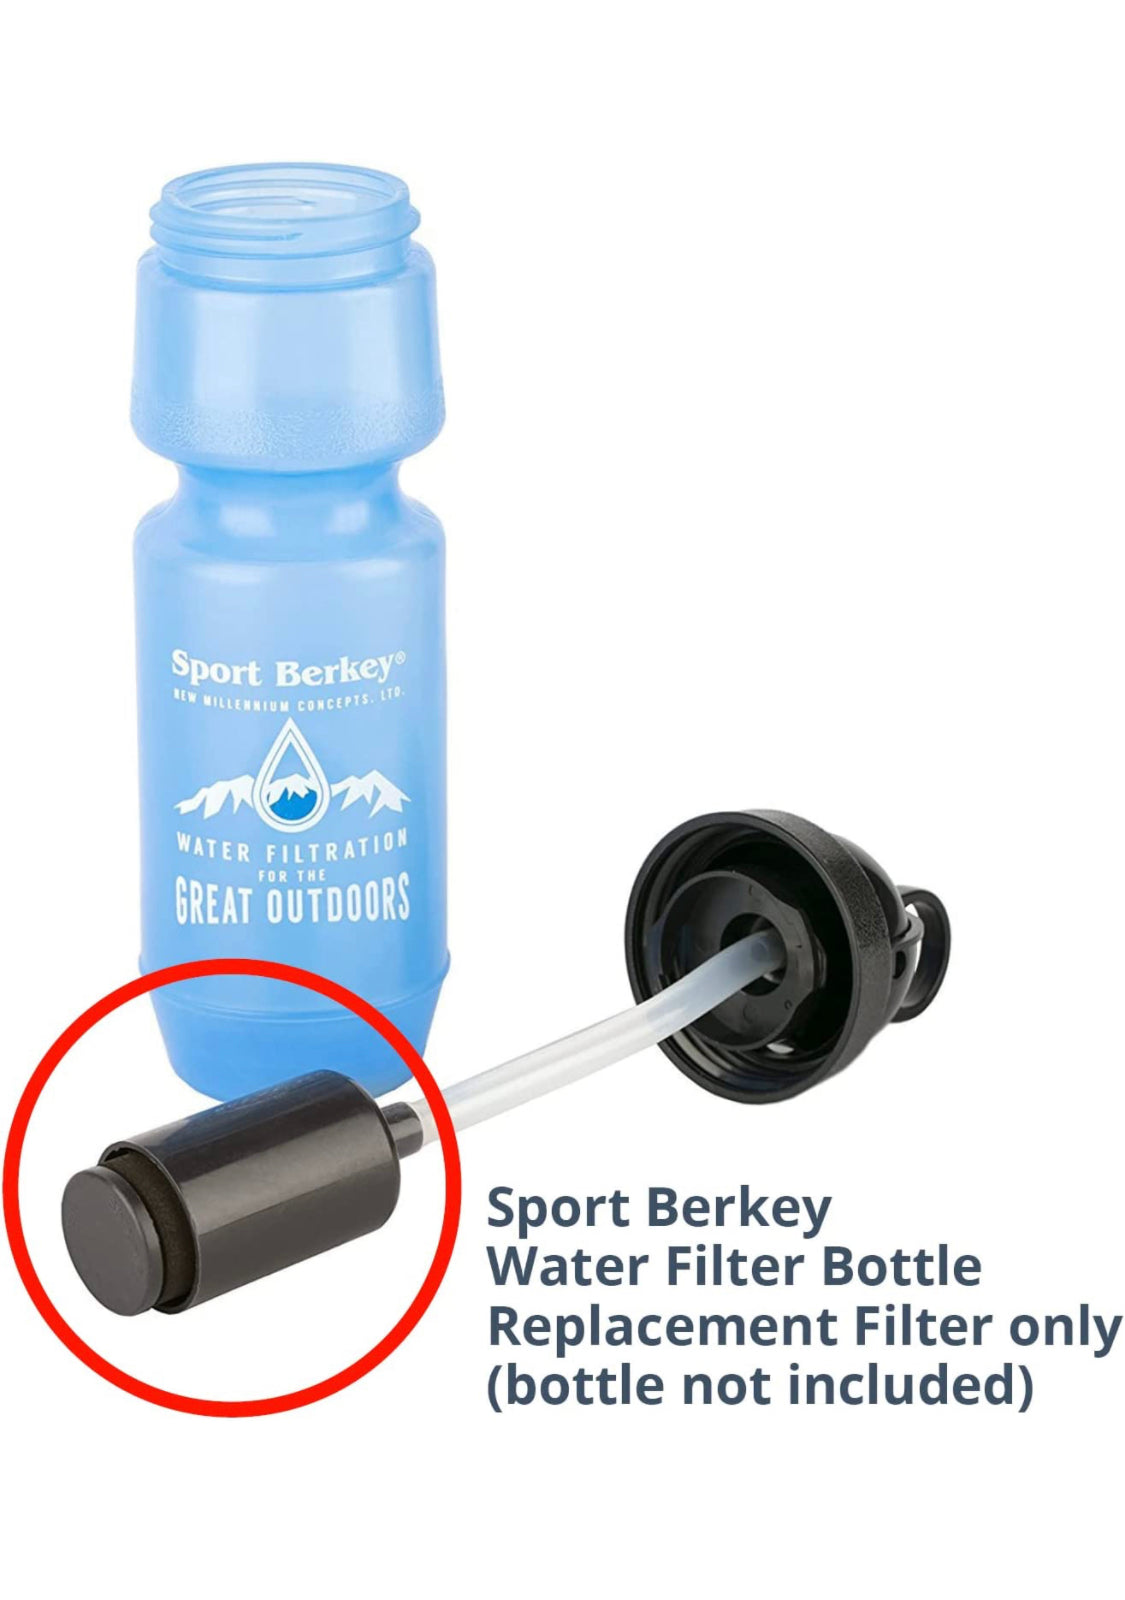 Berkey - Replacement Sports Berkey Filter